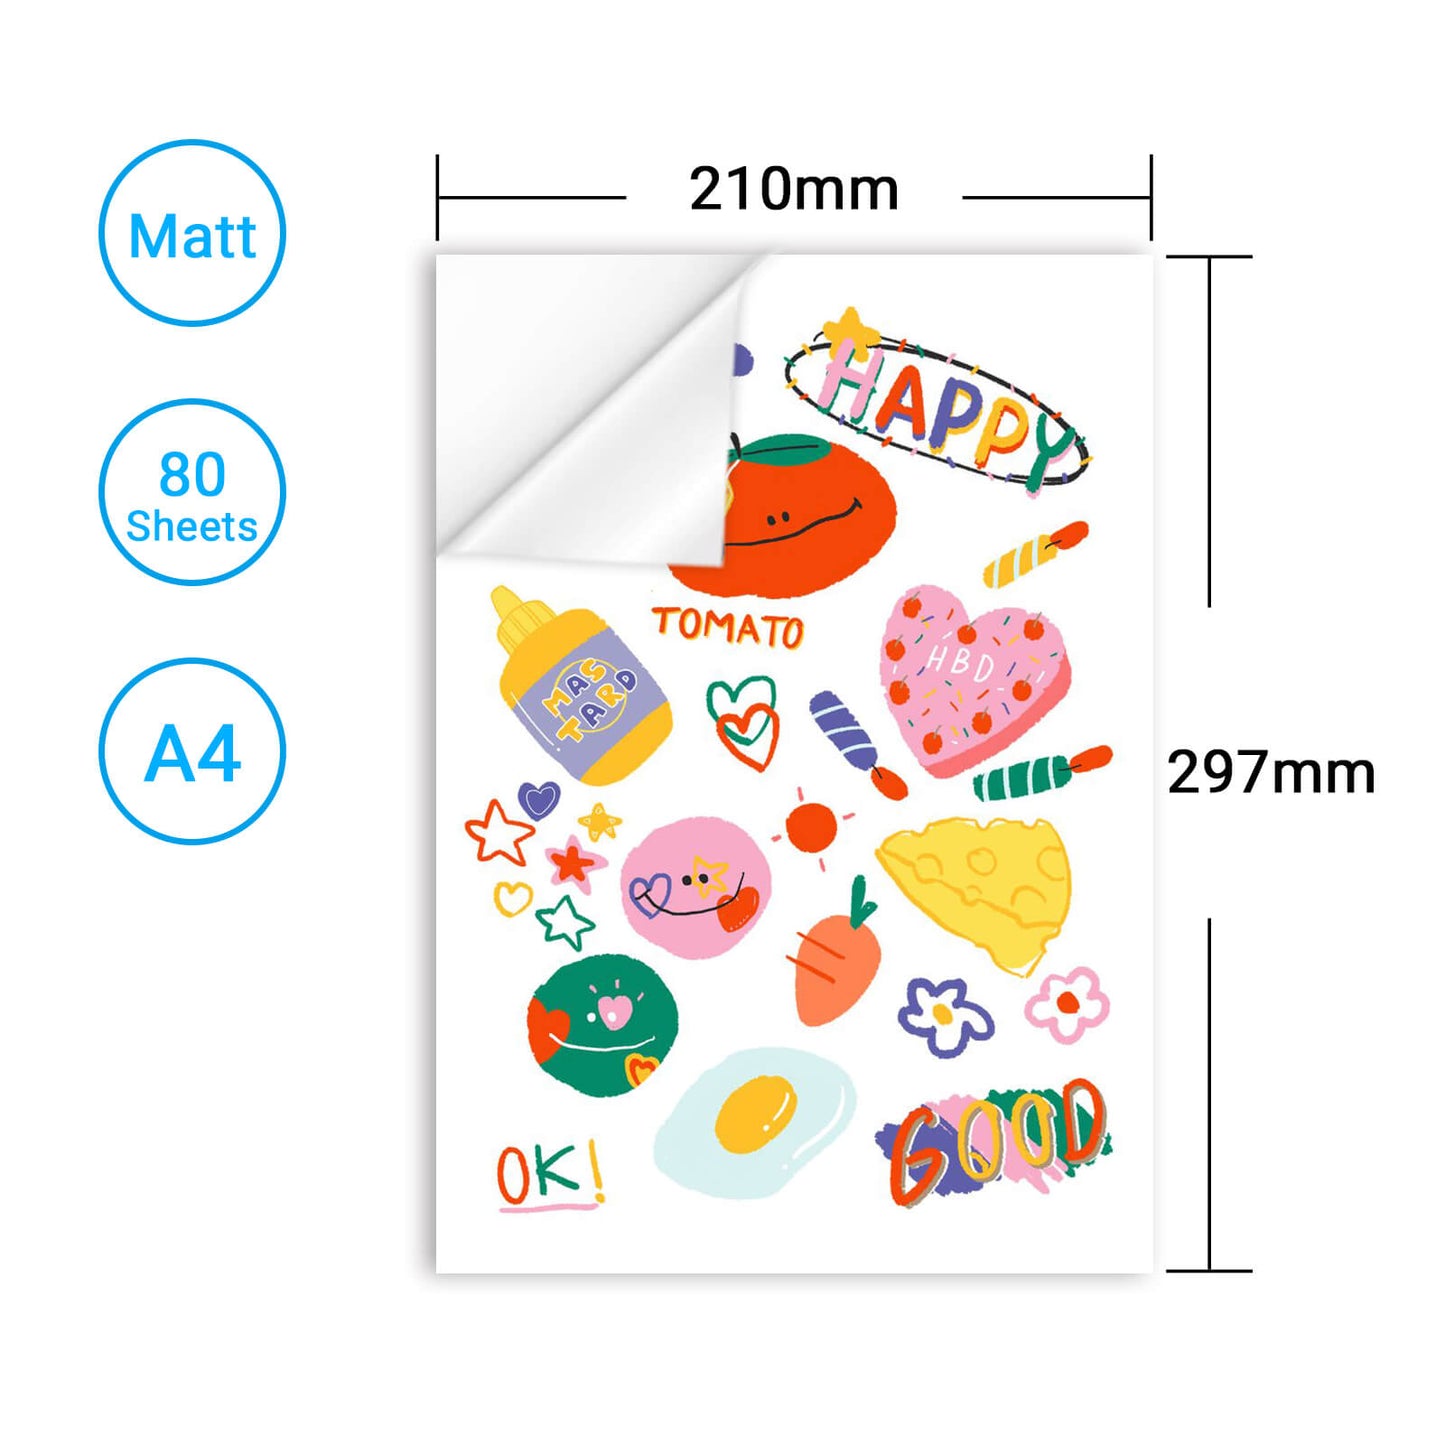 Kamo A4 Printable Matte Adhesive Paper, 210 x 297 mm, 80 sheets